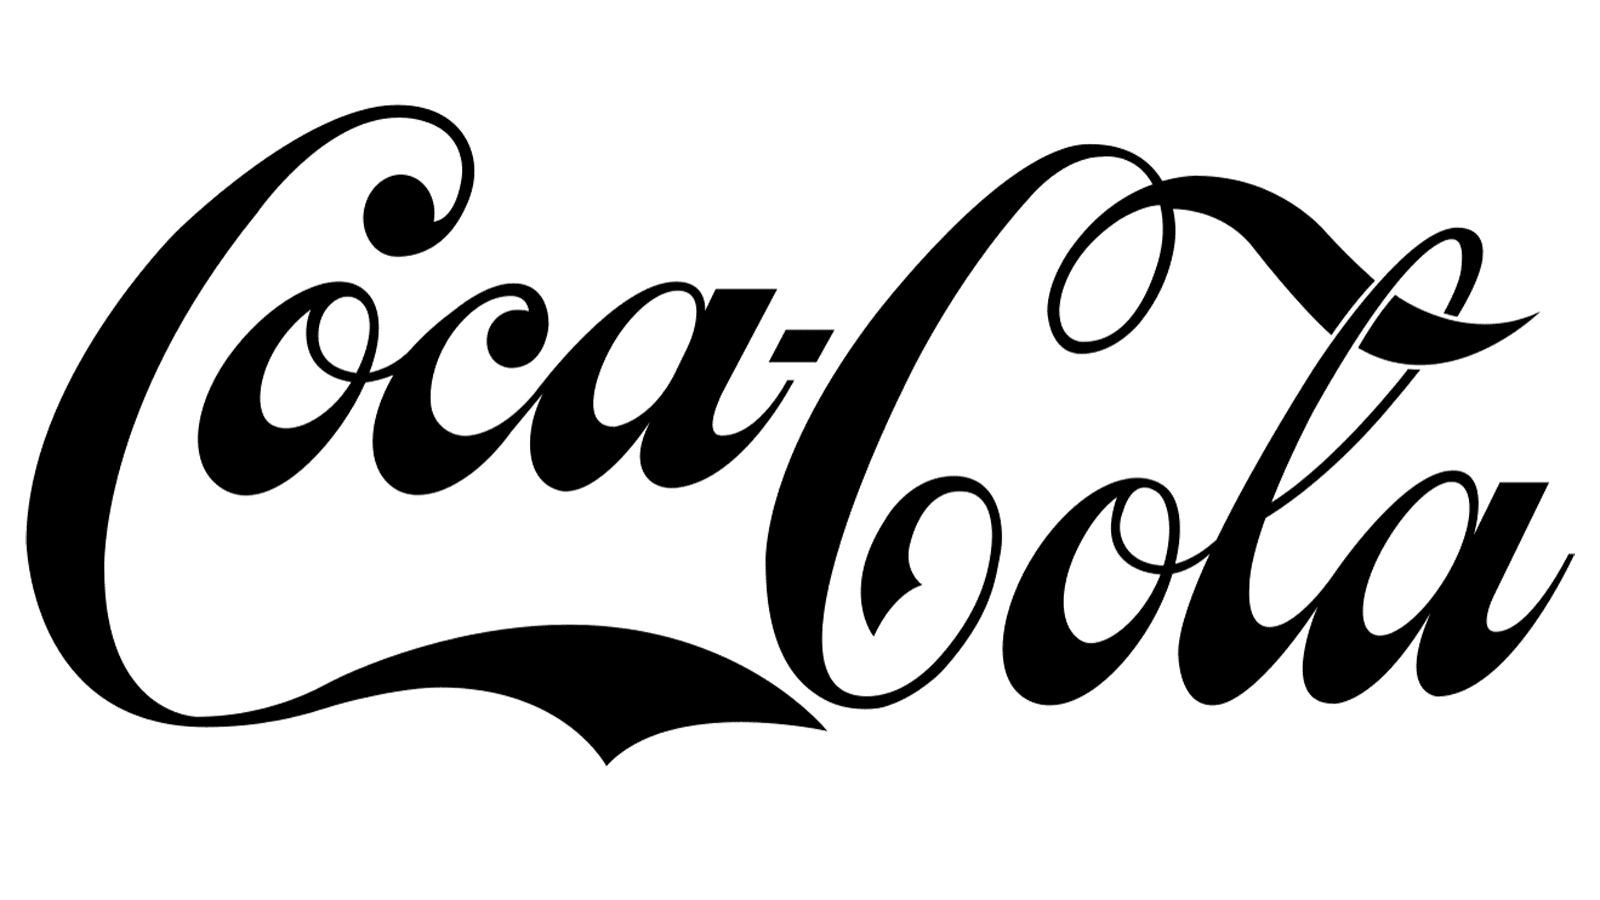 1886 coca cola logo